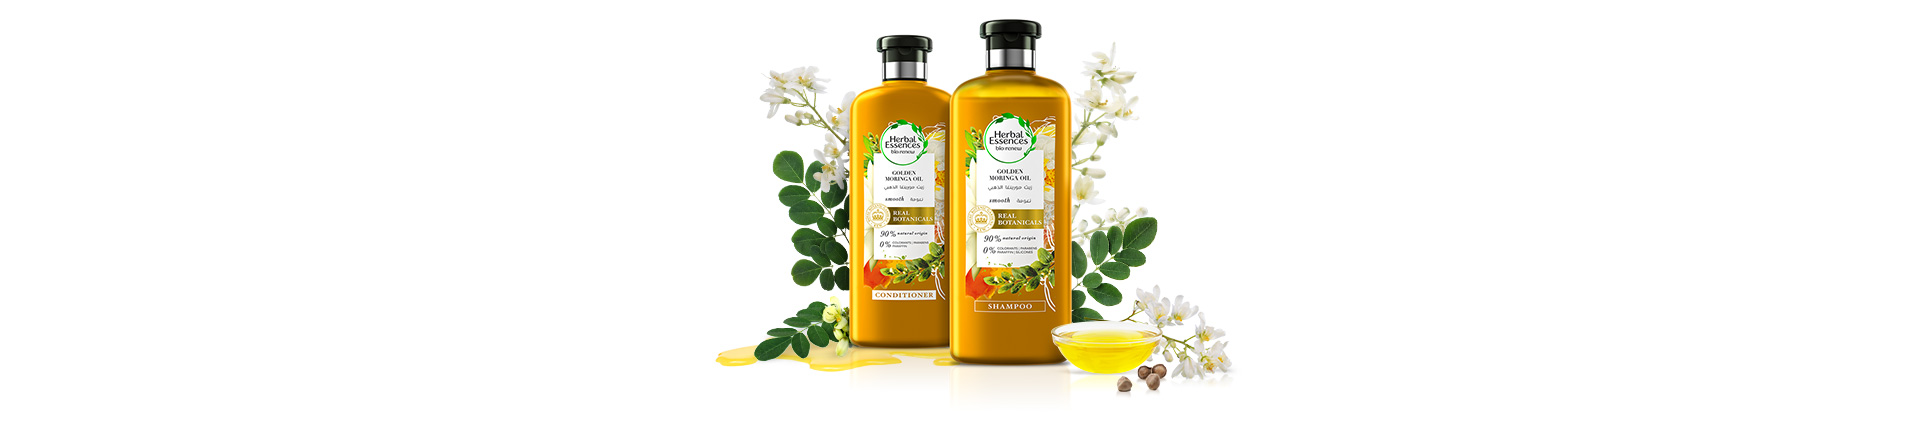 Bottles of Herbal Essences Shampoo & Conditioner Golden moringa oil Collection